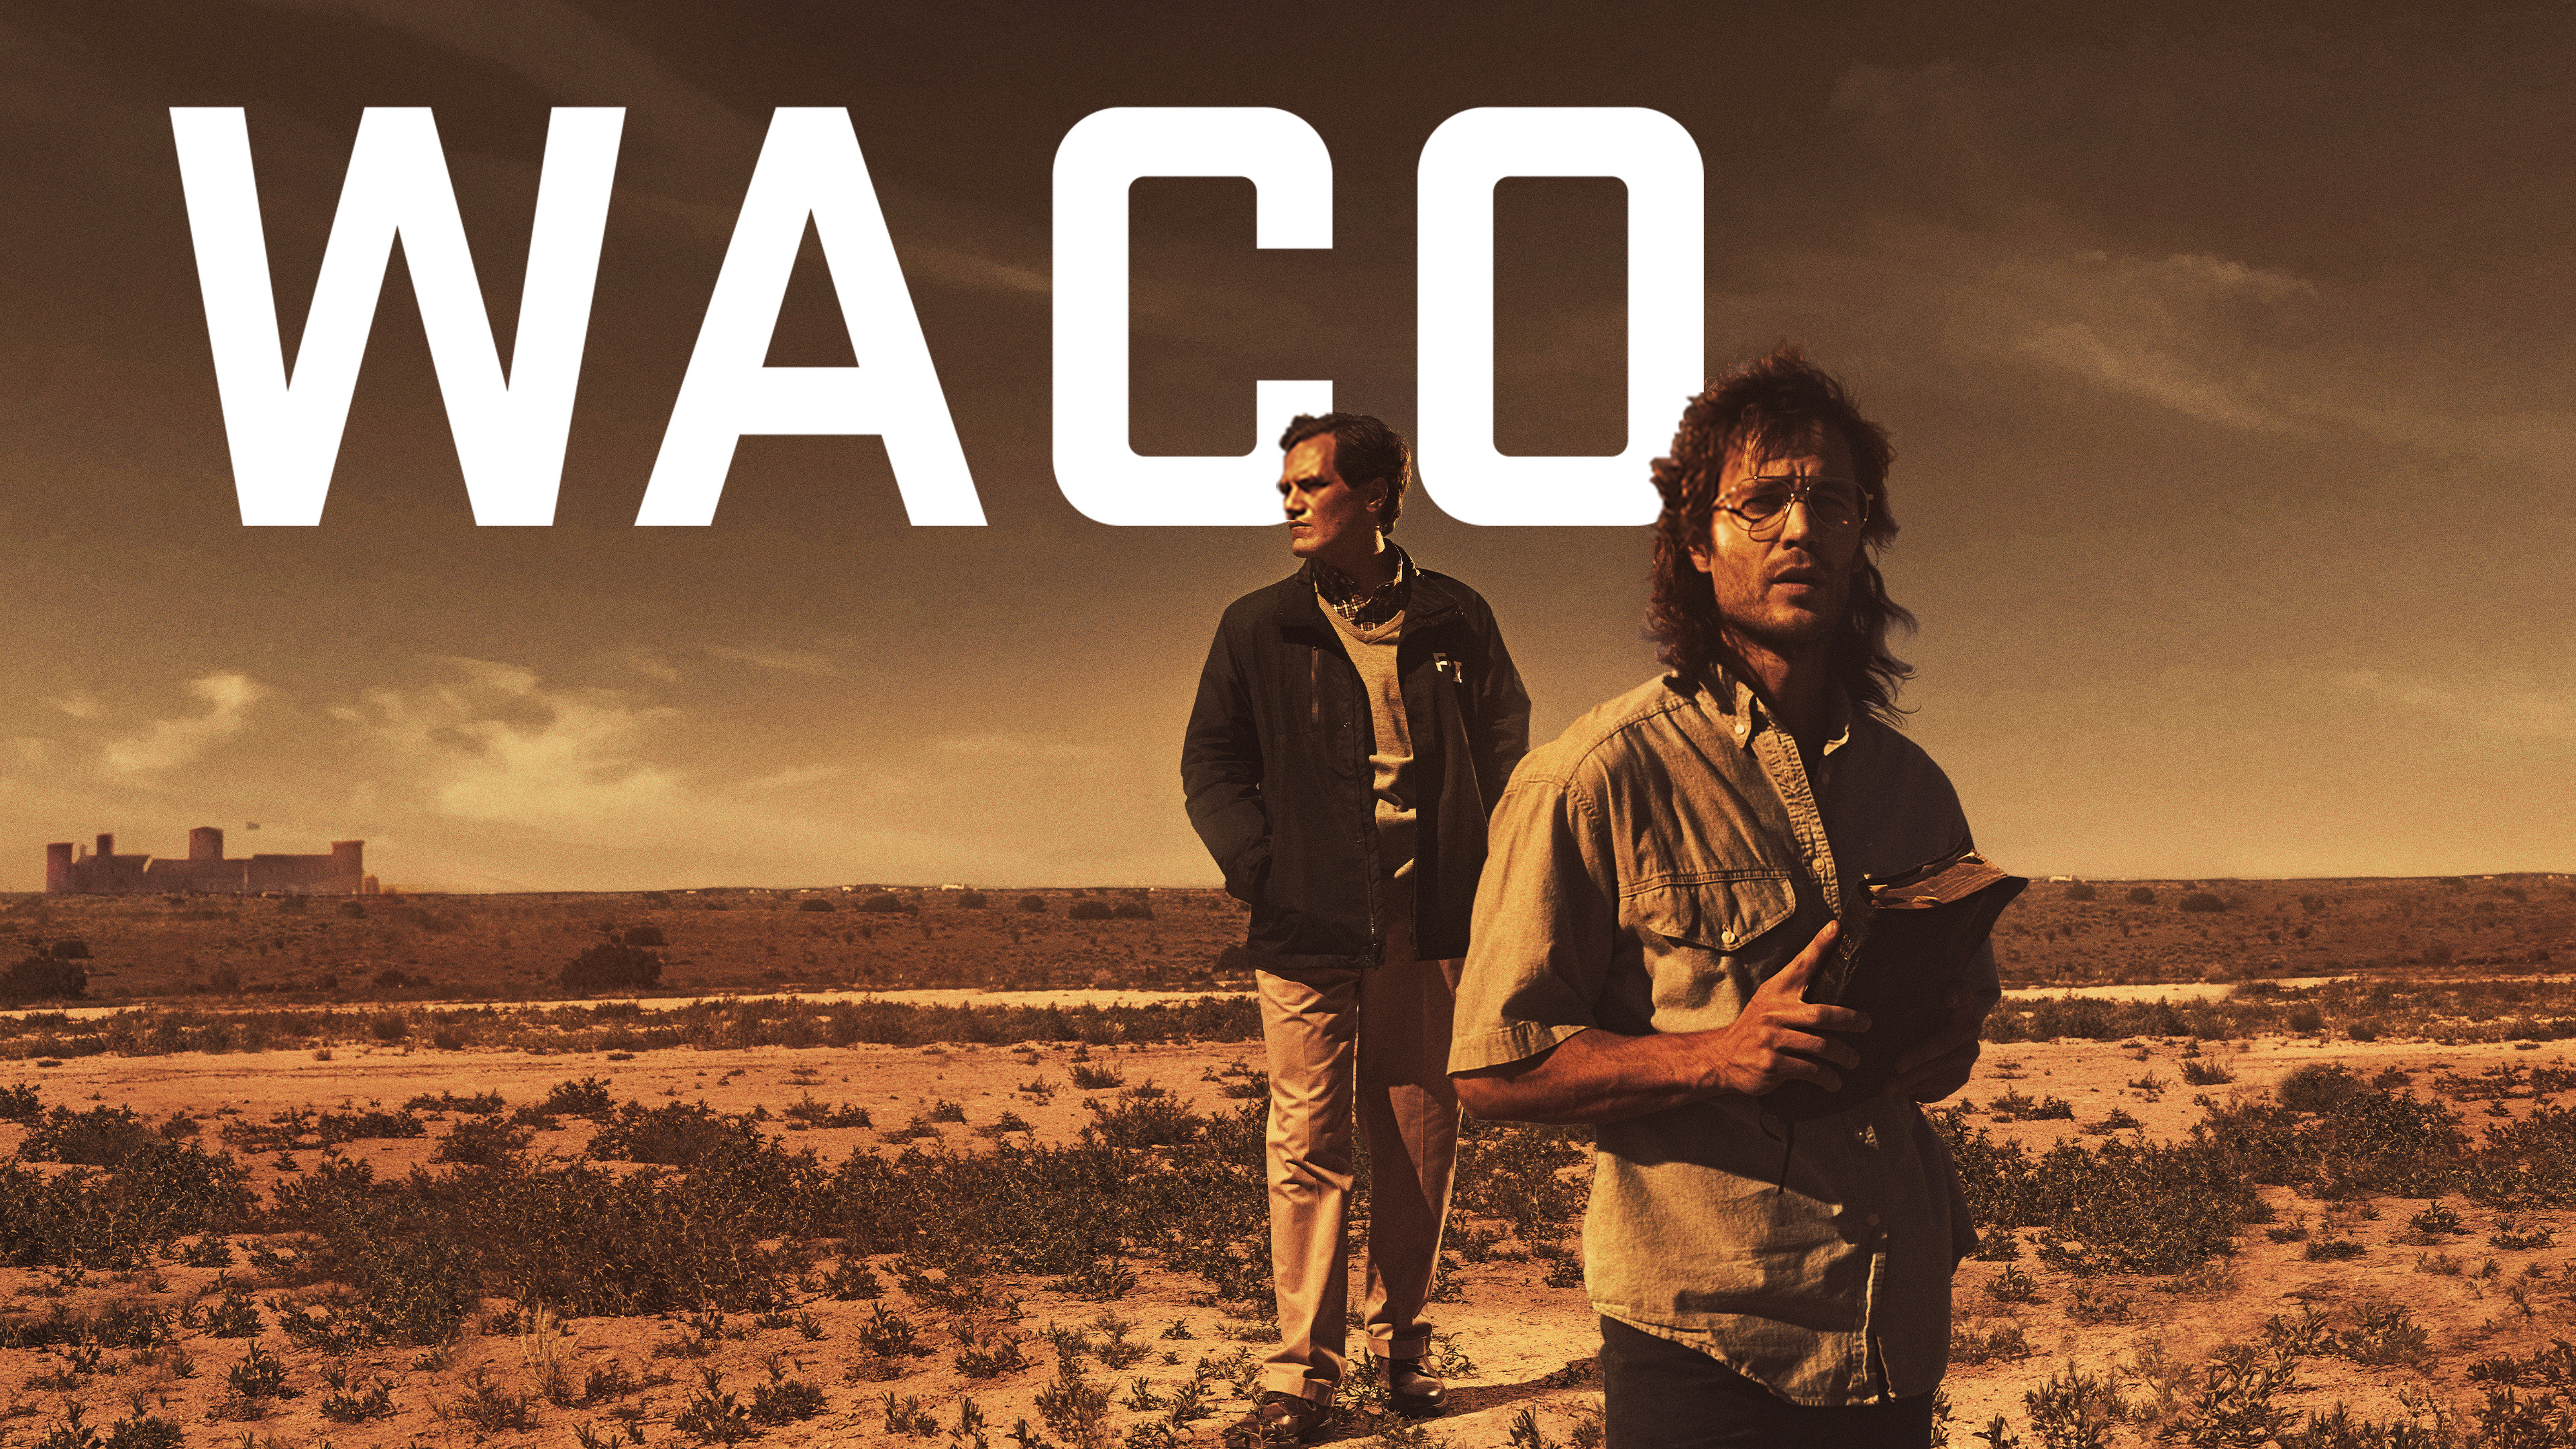 Waco TV series, David Koresh, Branch Davidian compound, FBI siege, 3840x2160 4K Desktop